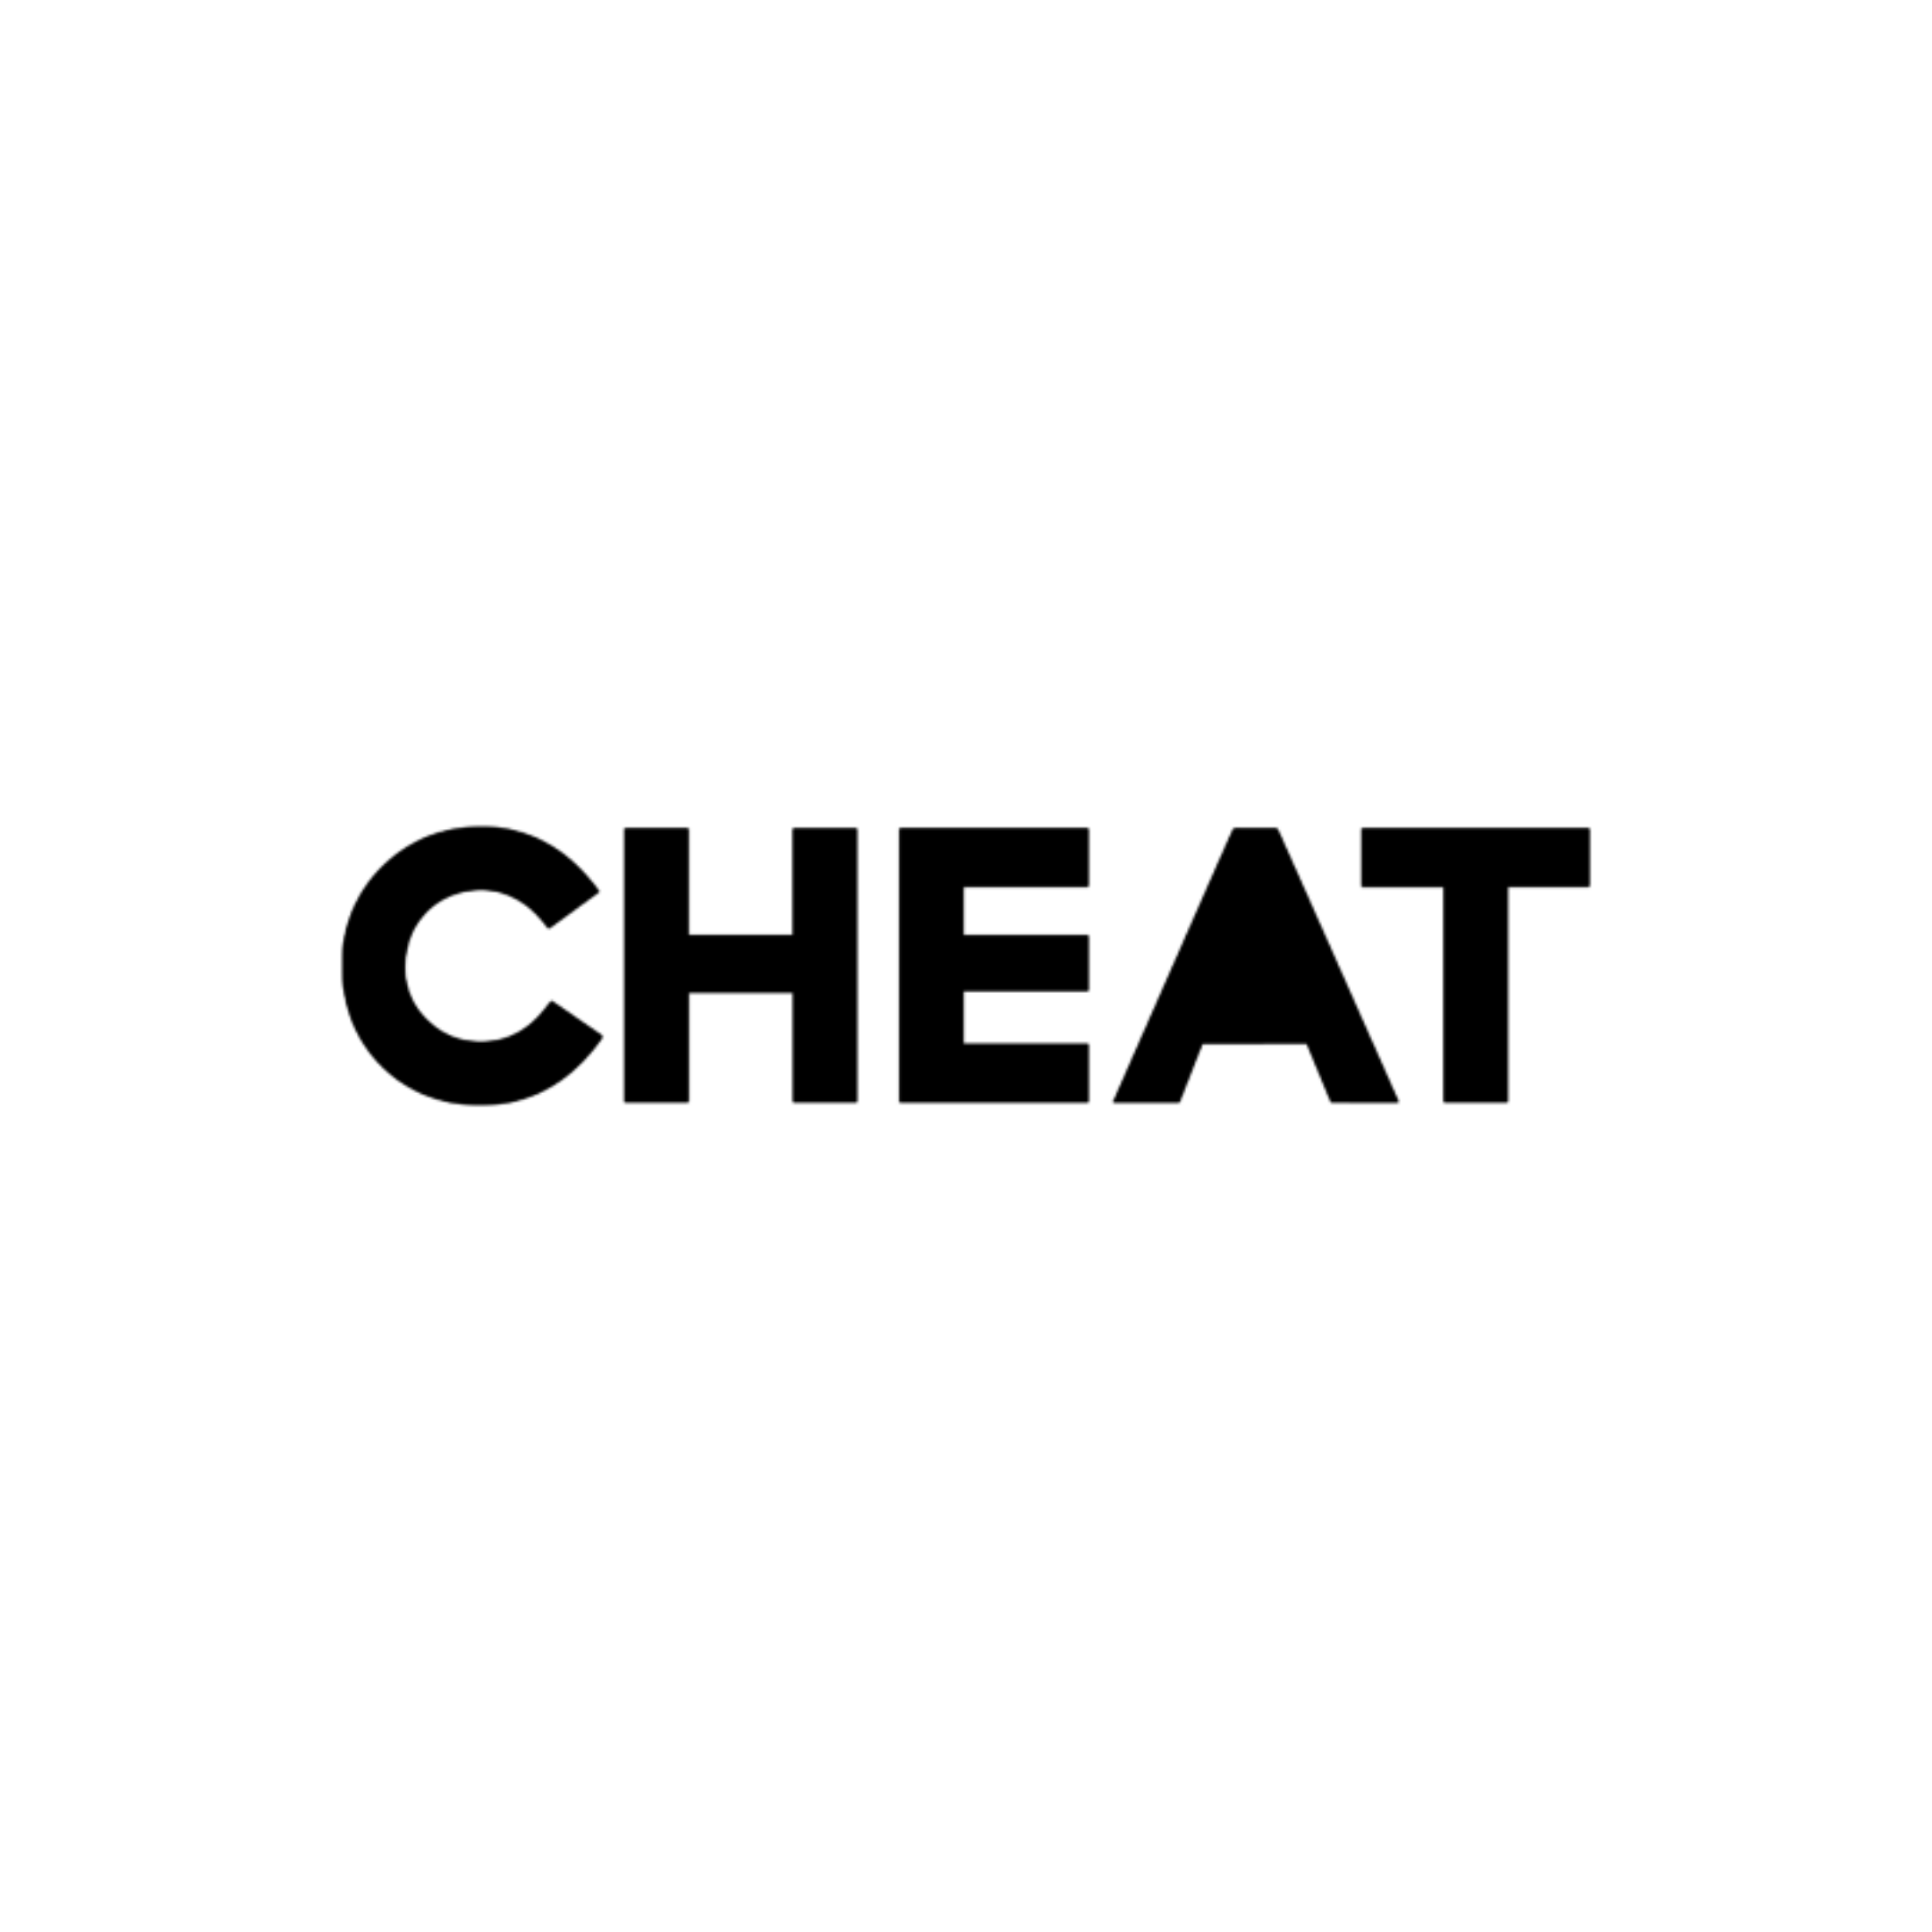 Yes I Cheated